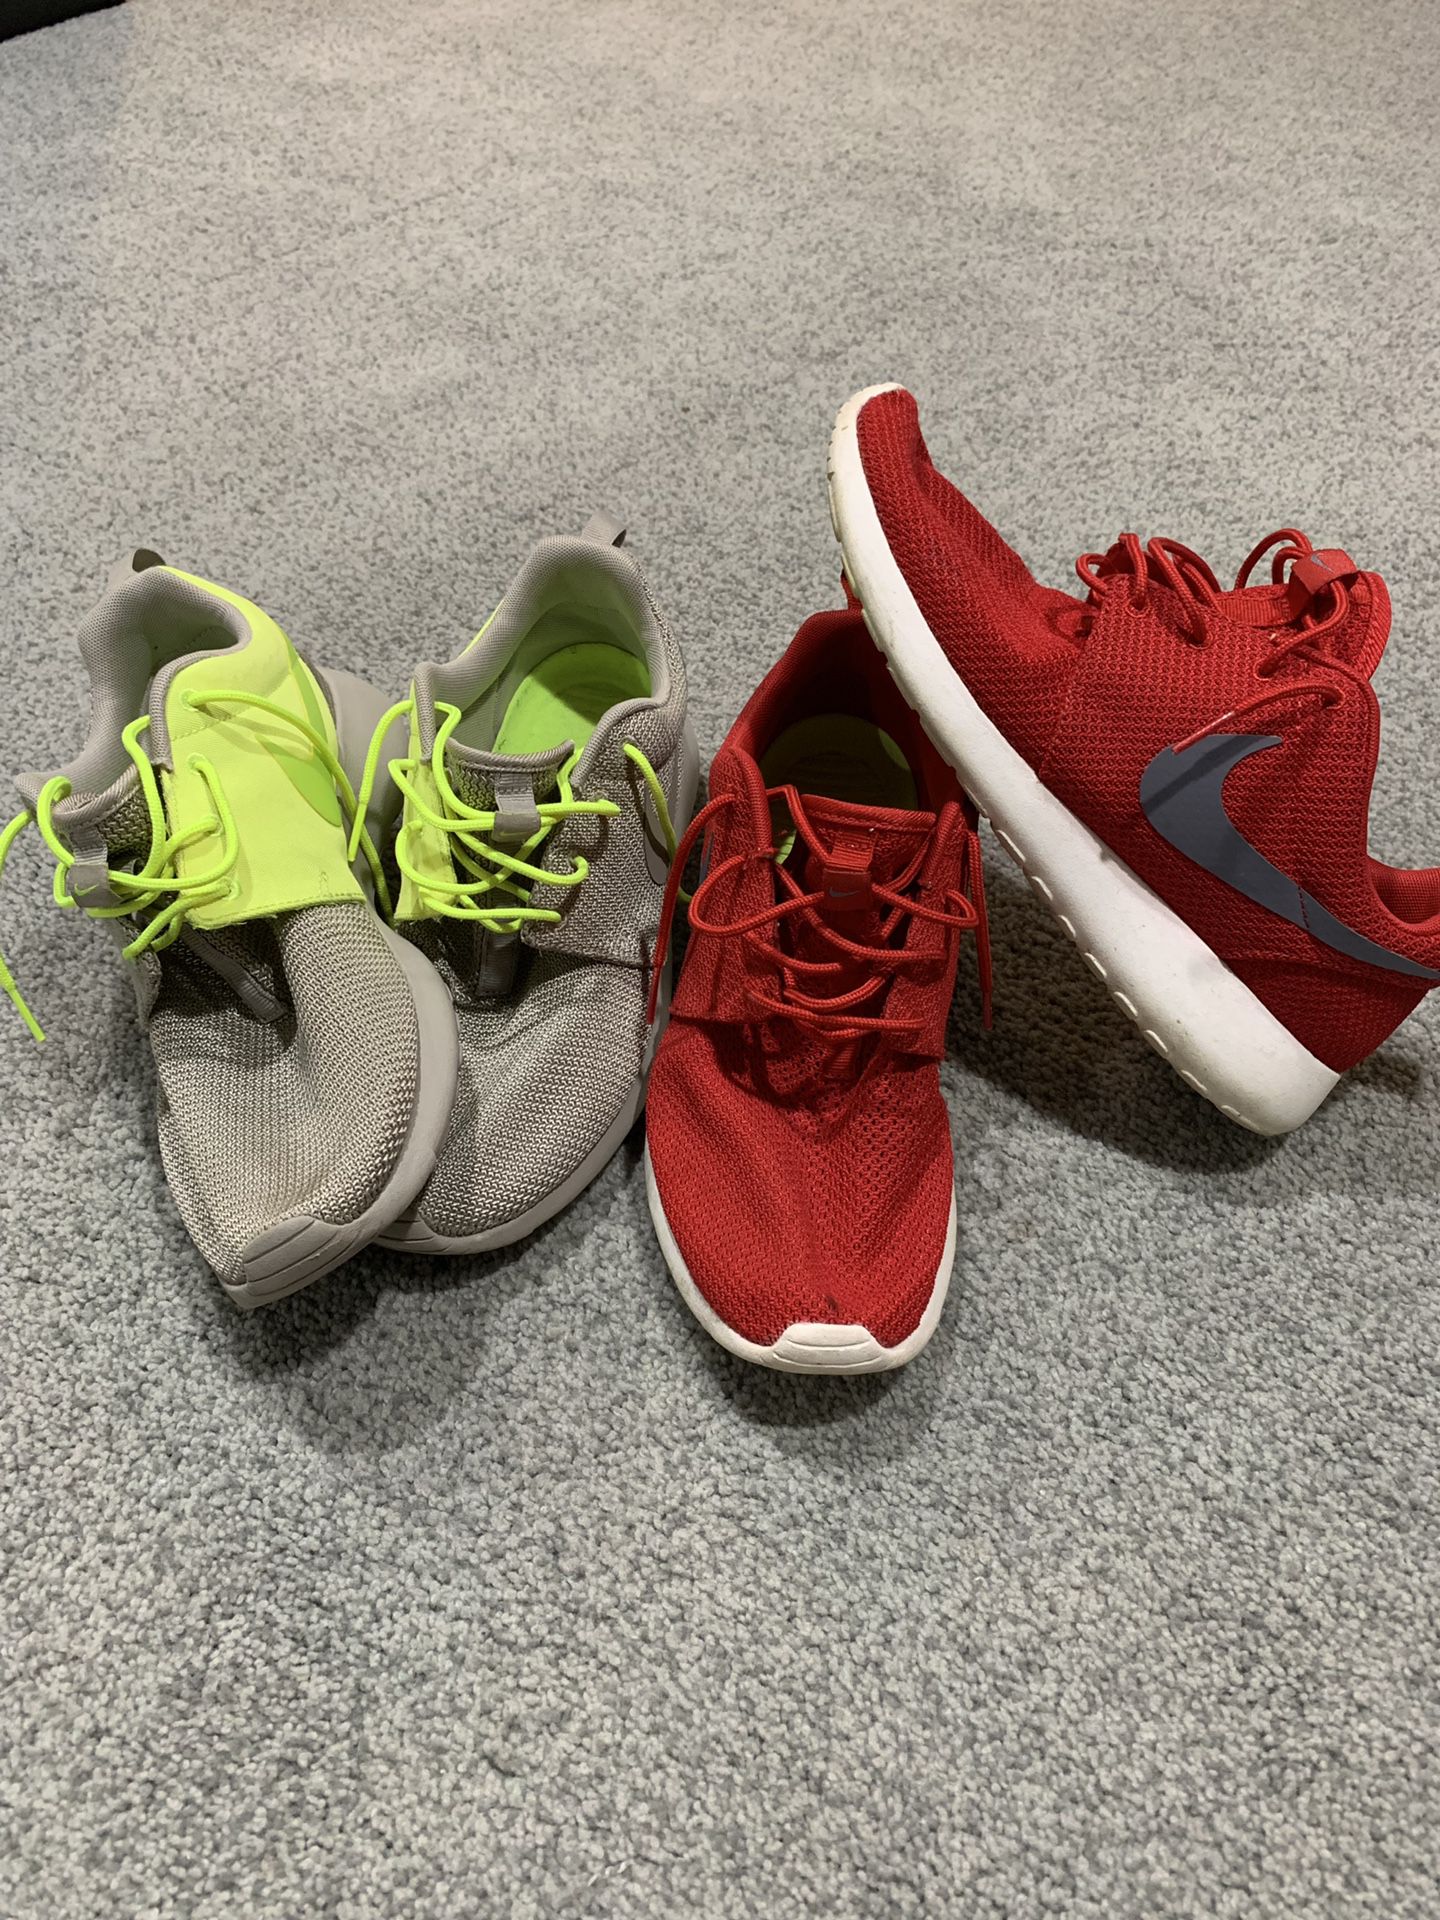 Nike Roshe run (adidas, Reebok)